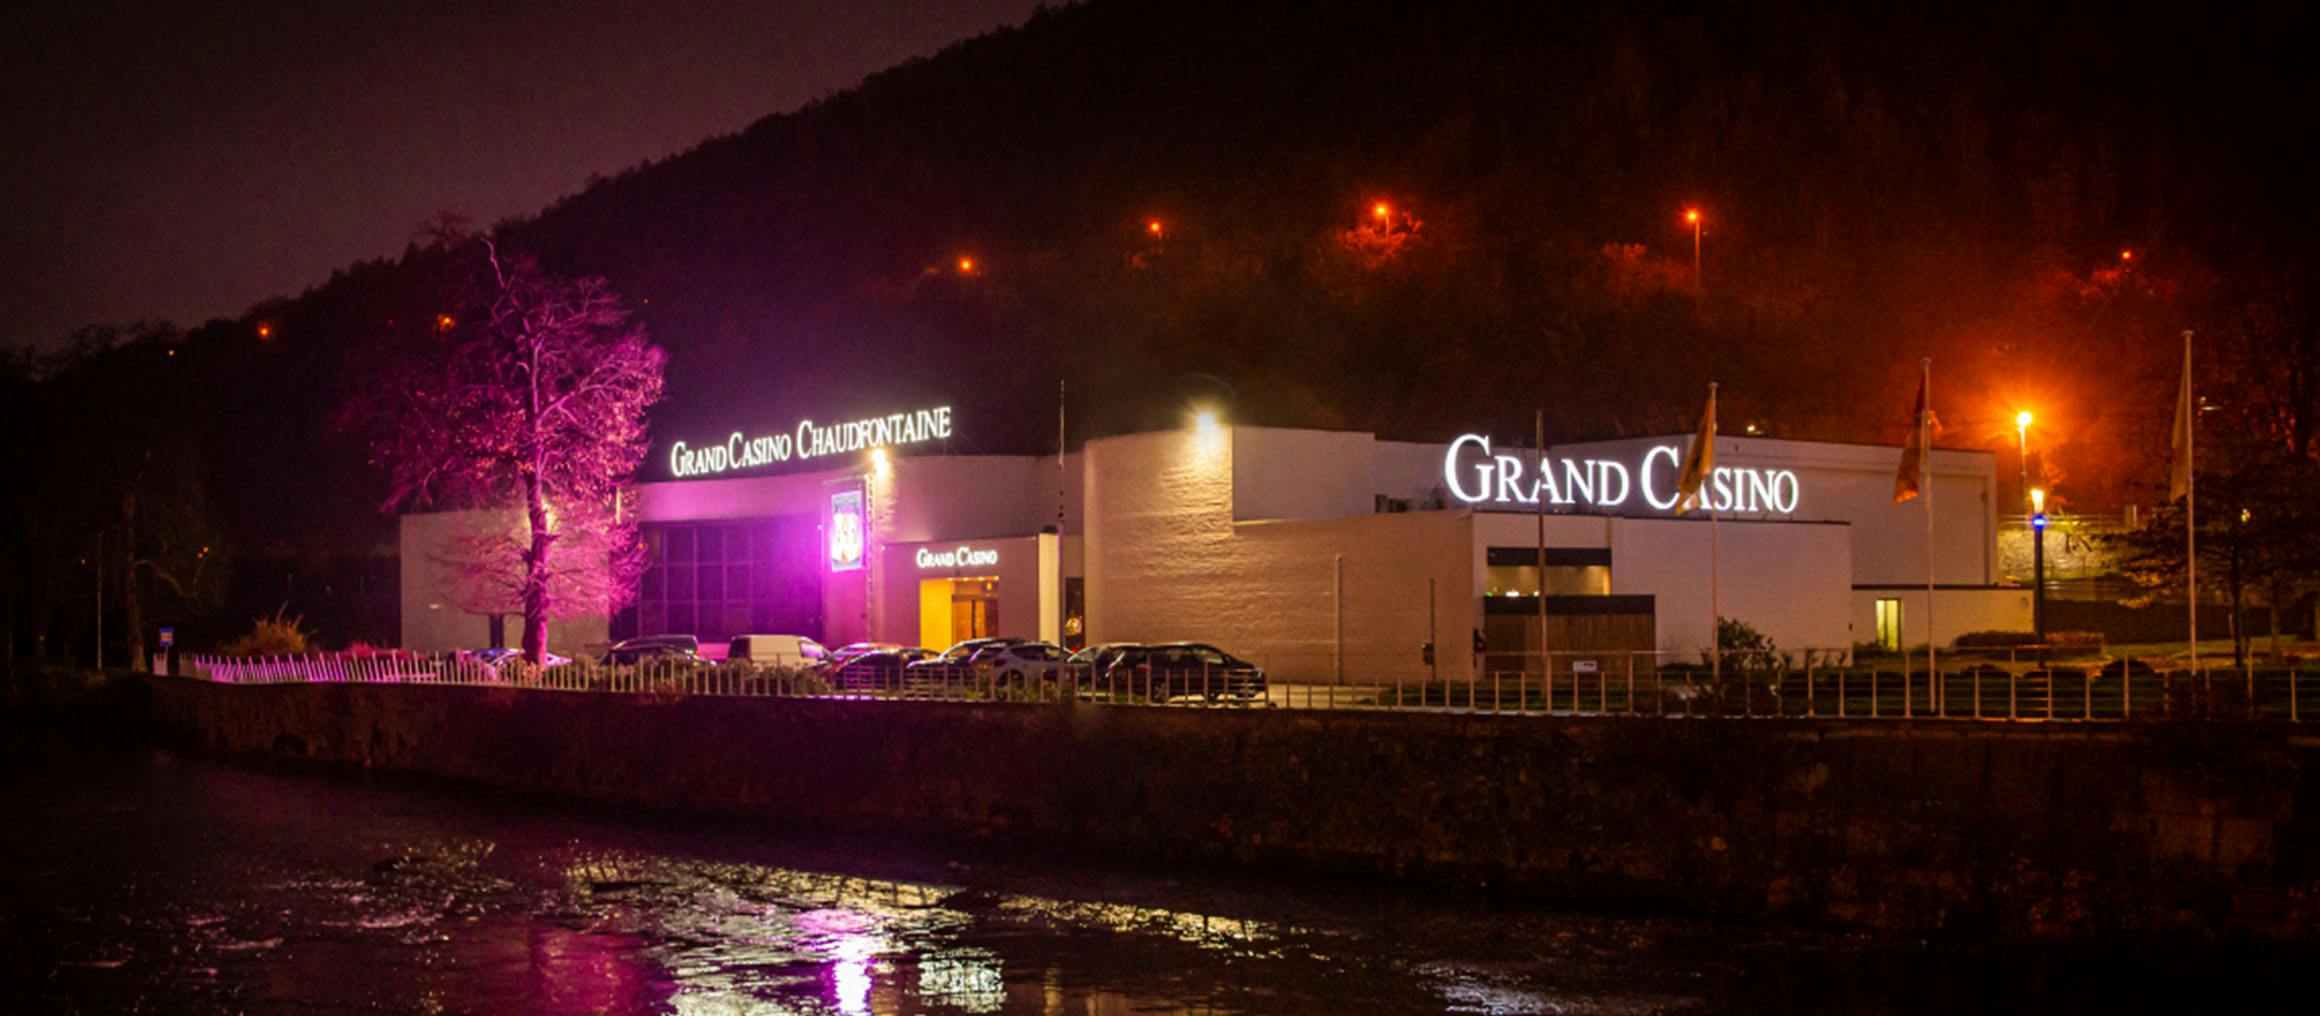 Grand Casino Chaudfontaine Background Banner